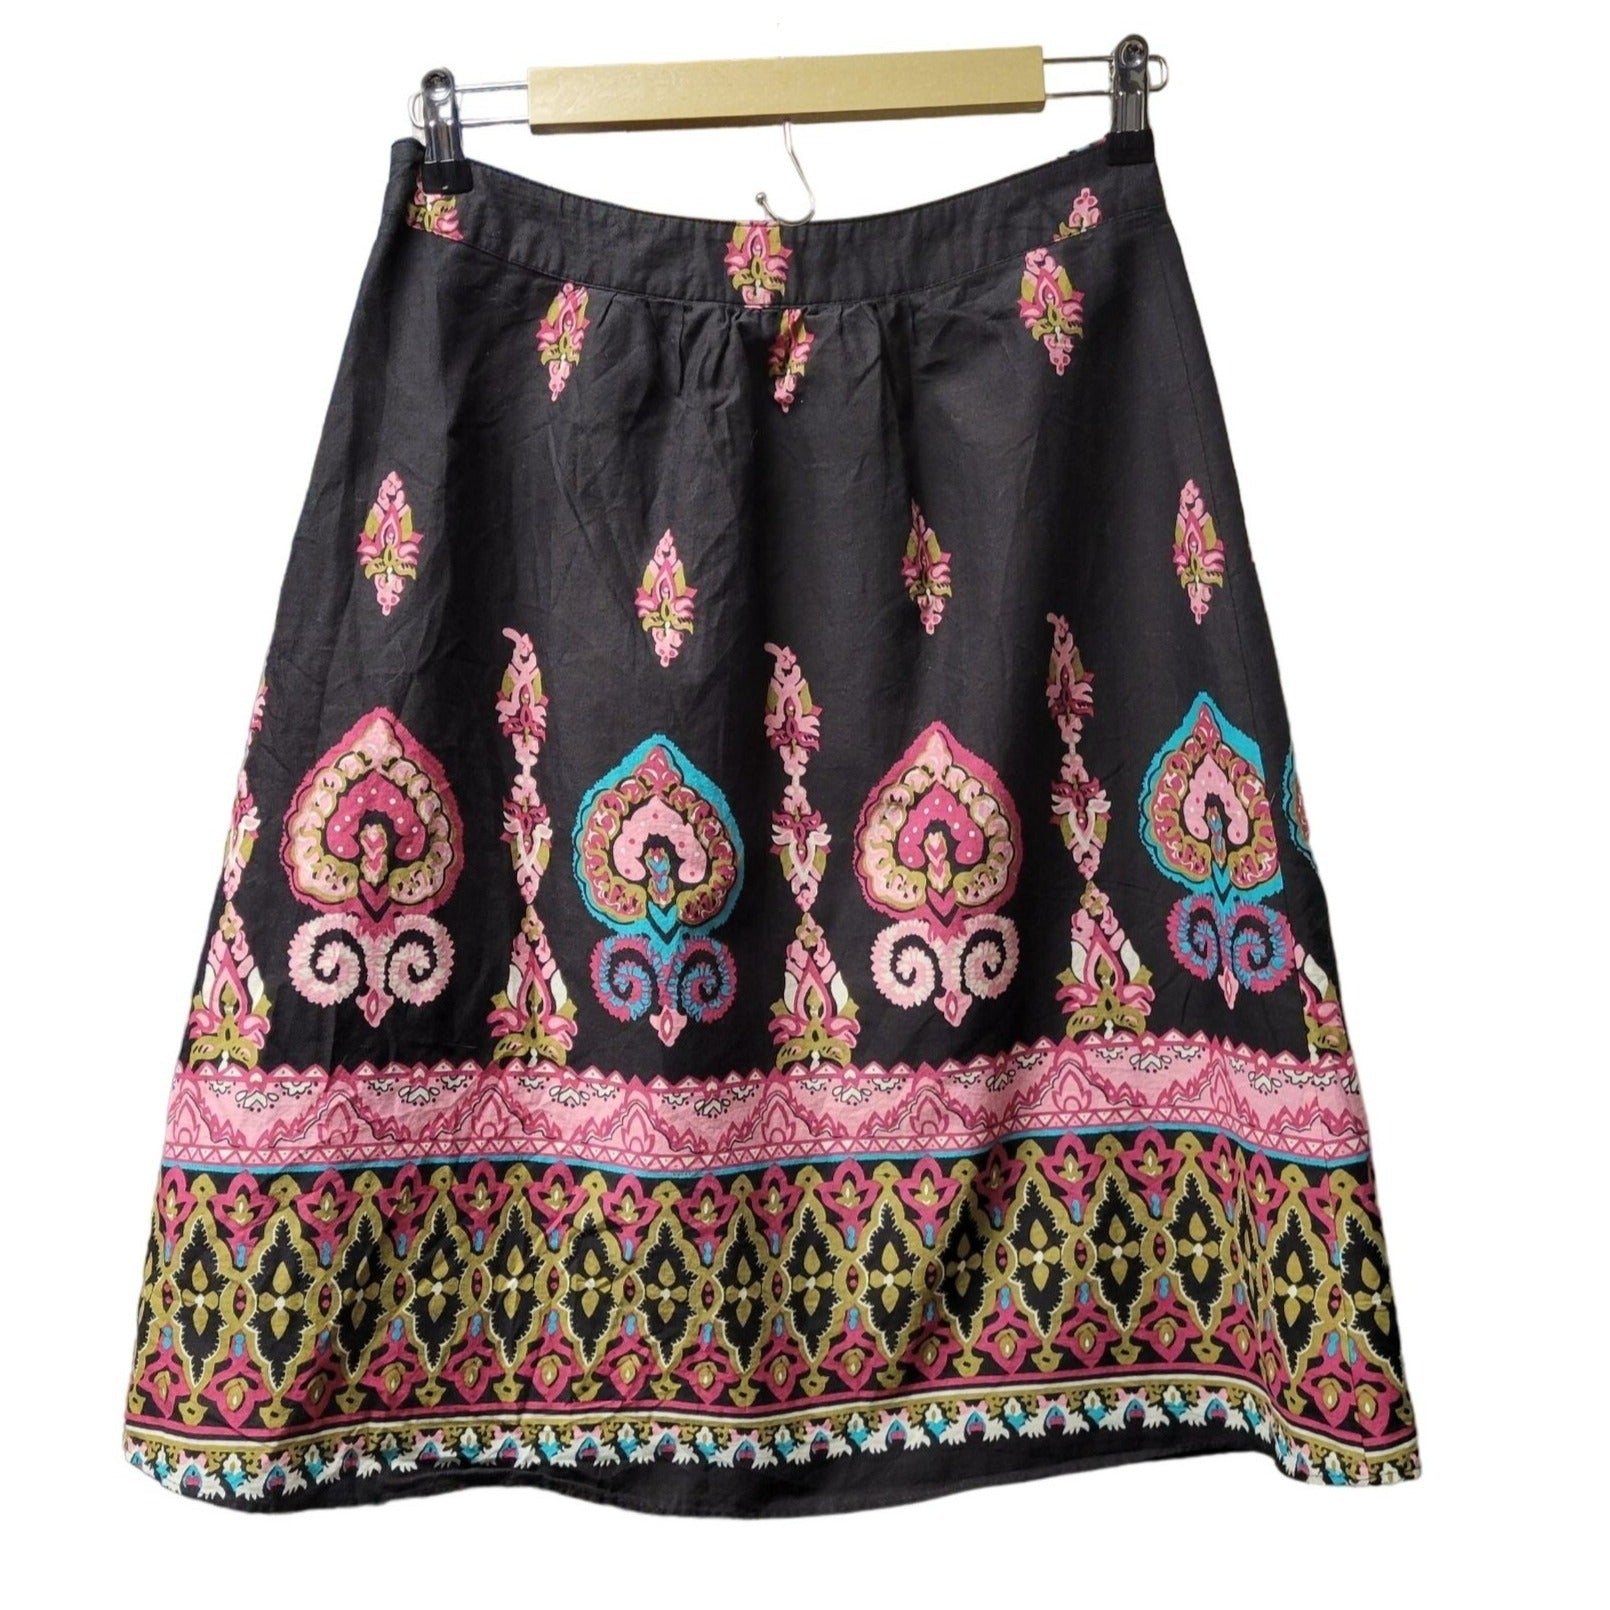 Down East Basics Brand. Lightweight Cotton Women's Midi Skirt, Size Small